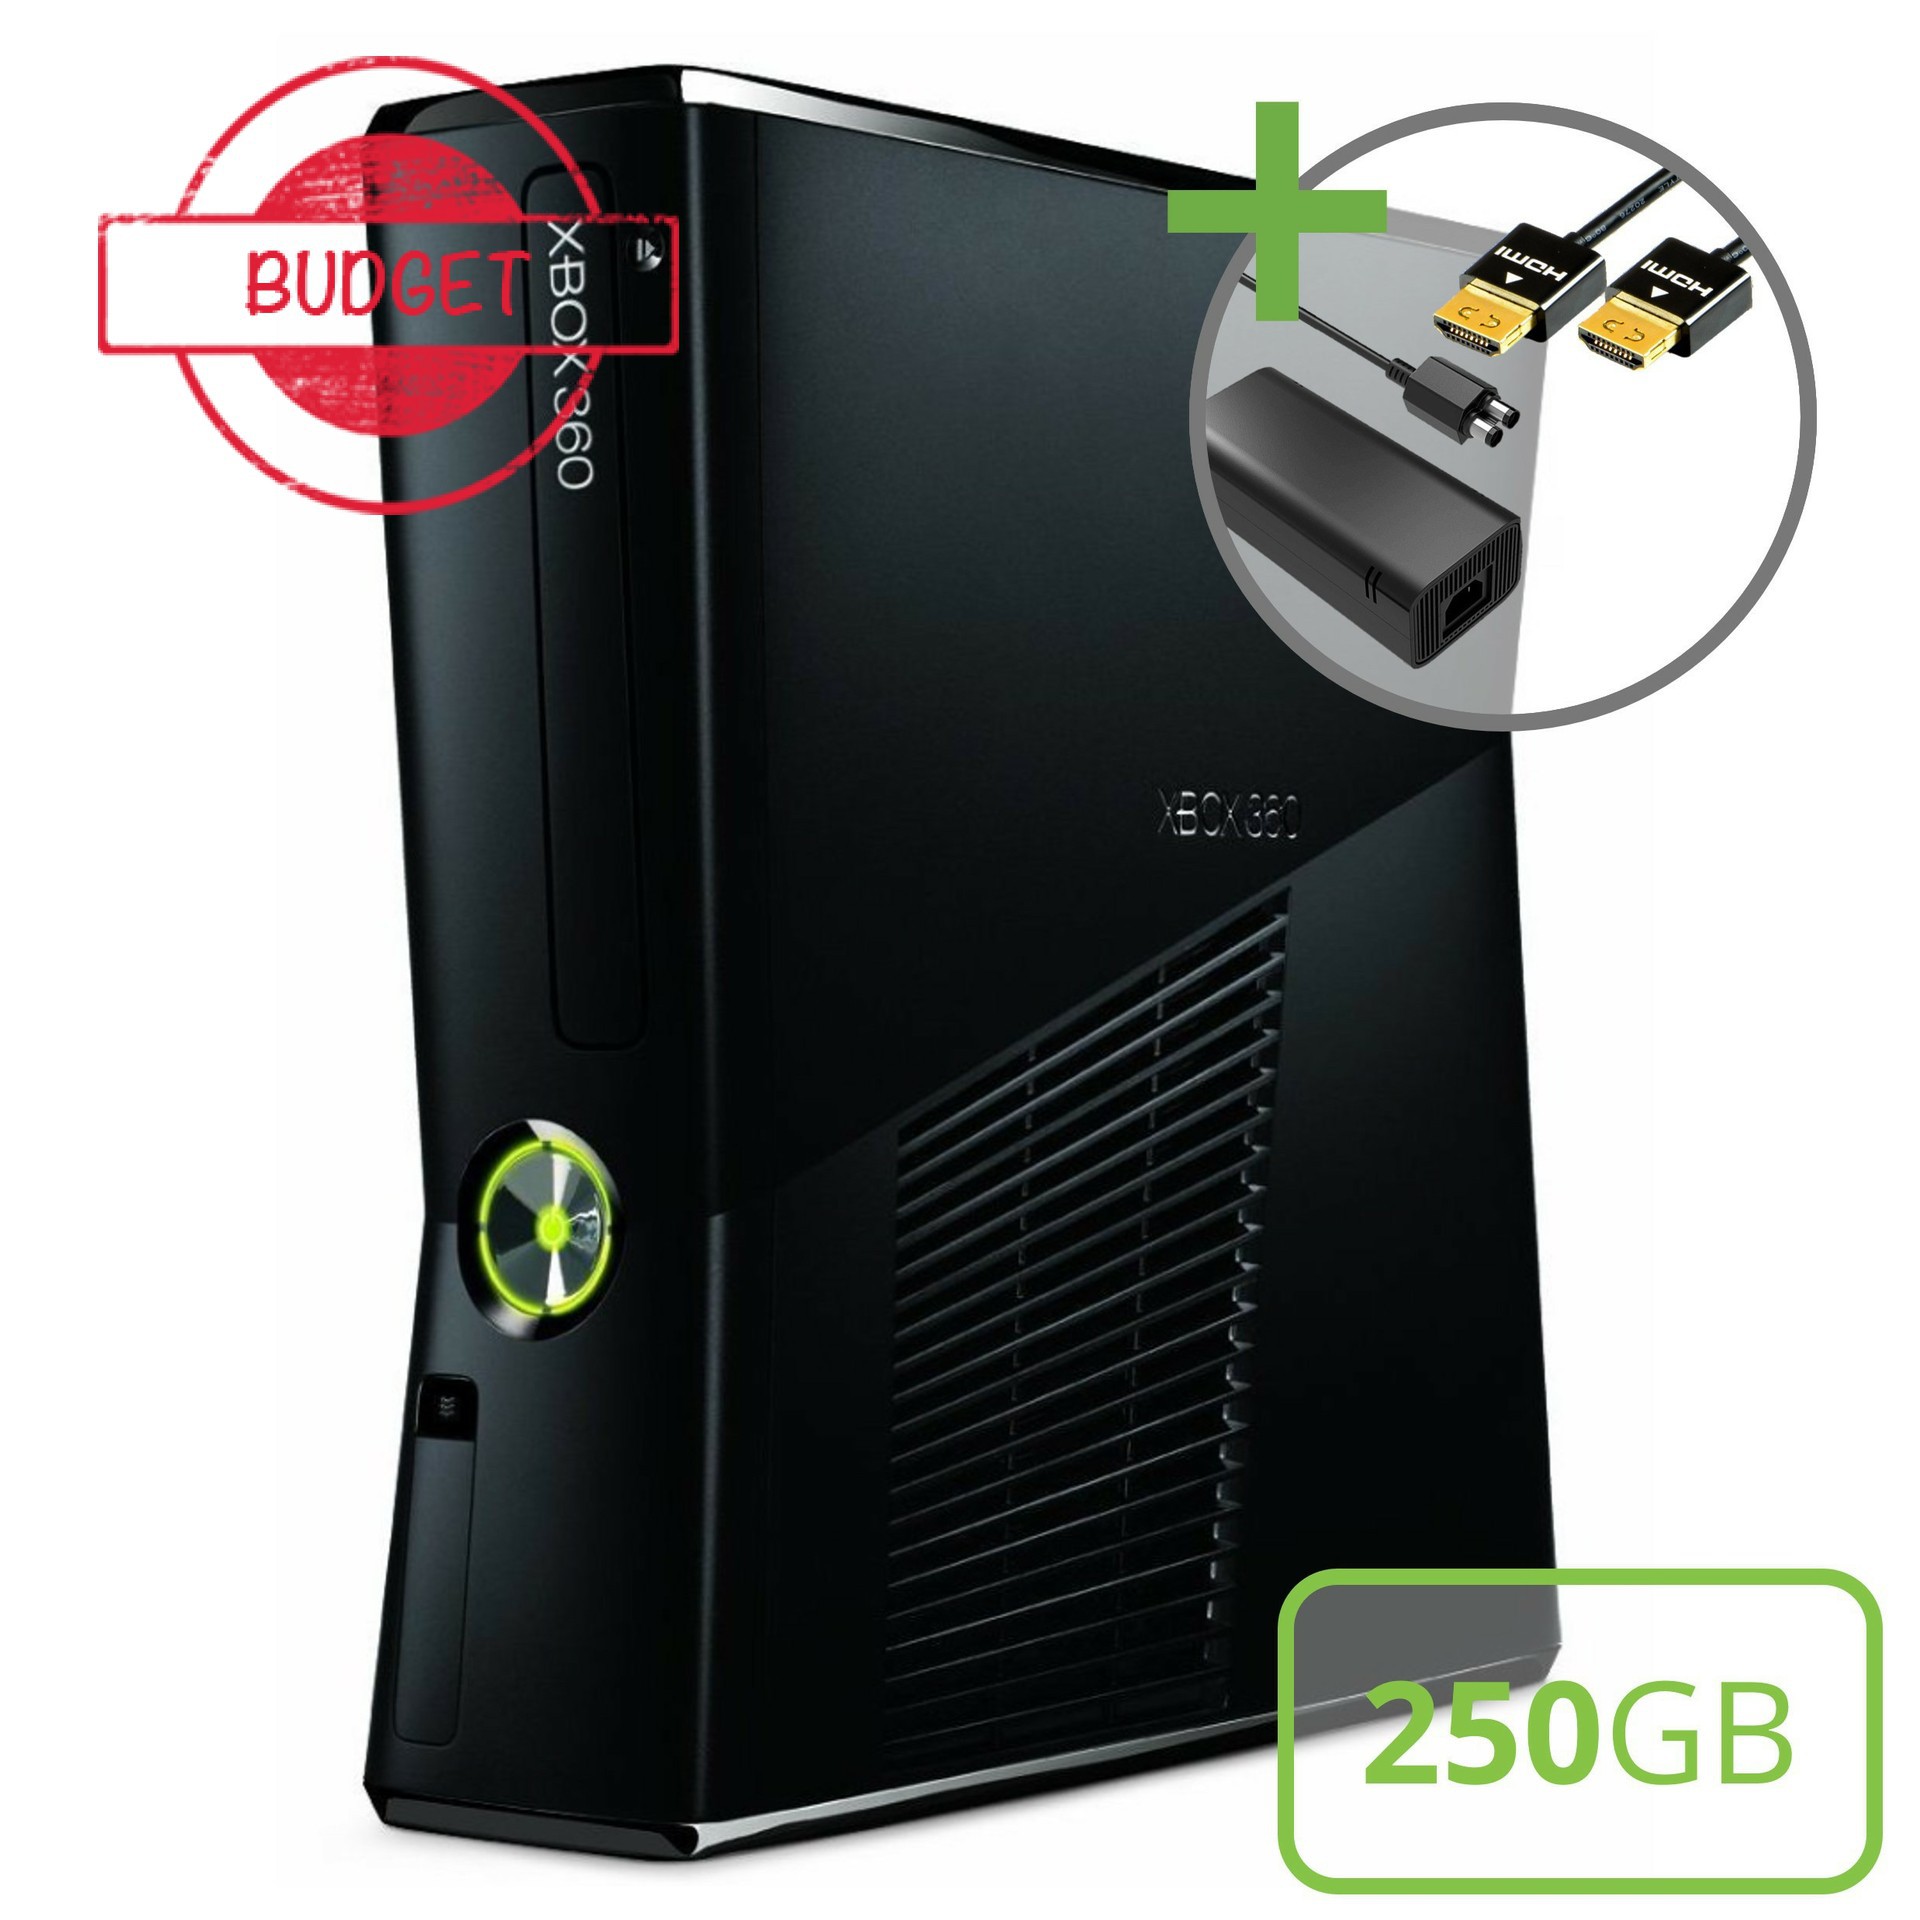 Microsoft Xbox 360 Slim Console (250GB) - Budget Kopen | Xbox 360 Hardware